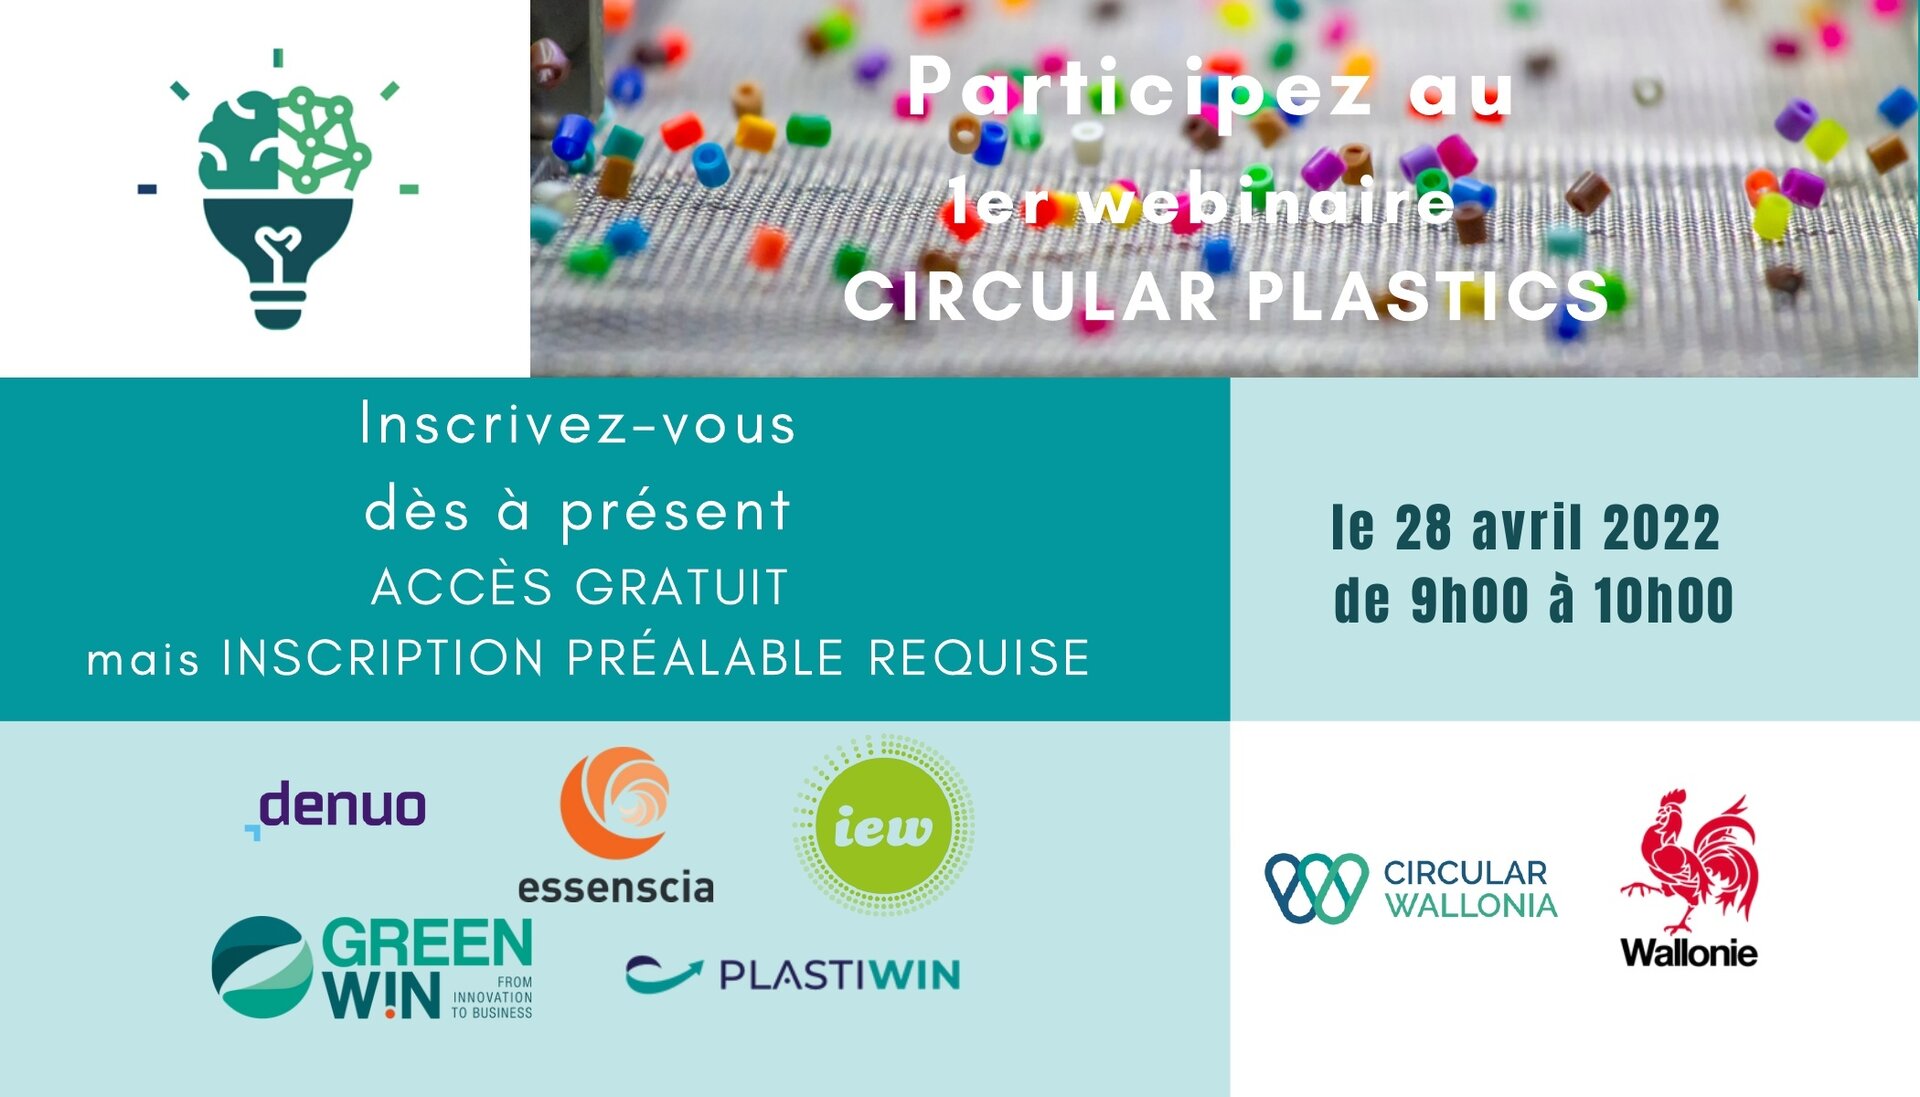 PARTICIPEZ au 1er webinaire Circular Plastics de la stratégie Circular Wallonia